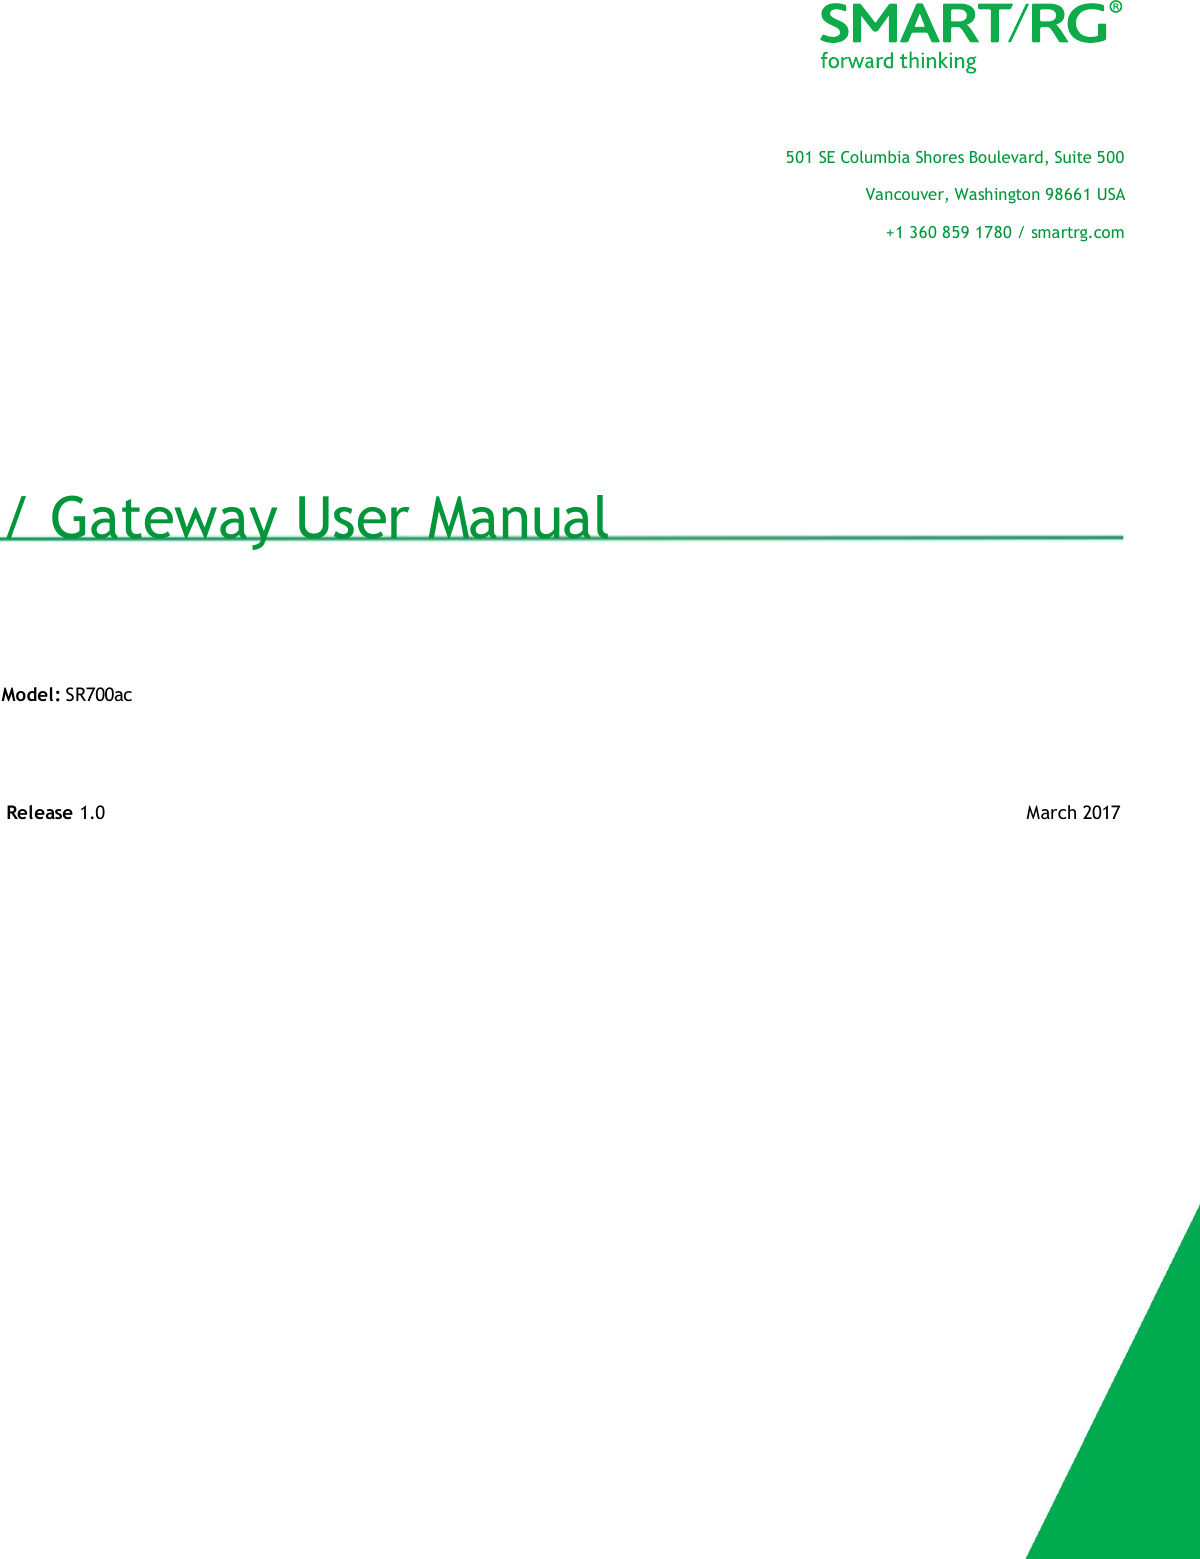 / Gateway User ManualModel: SR700acRelease 1.0 March 2017501 SE Columbia Shores Boulevard, Suite 500Vancouver, Washington 98661 USA+1 360 859 1780 / smartrg.com